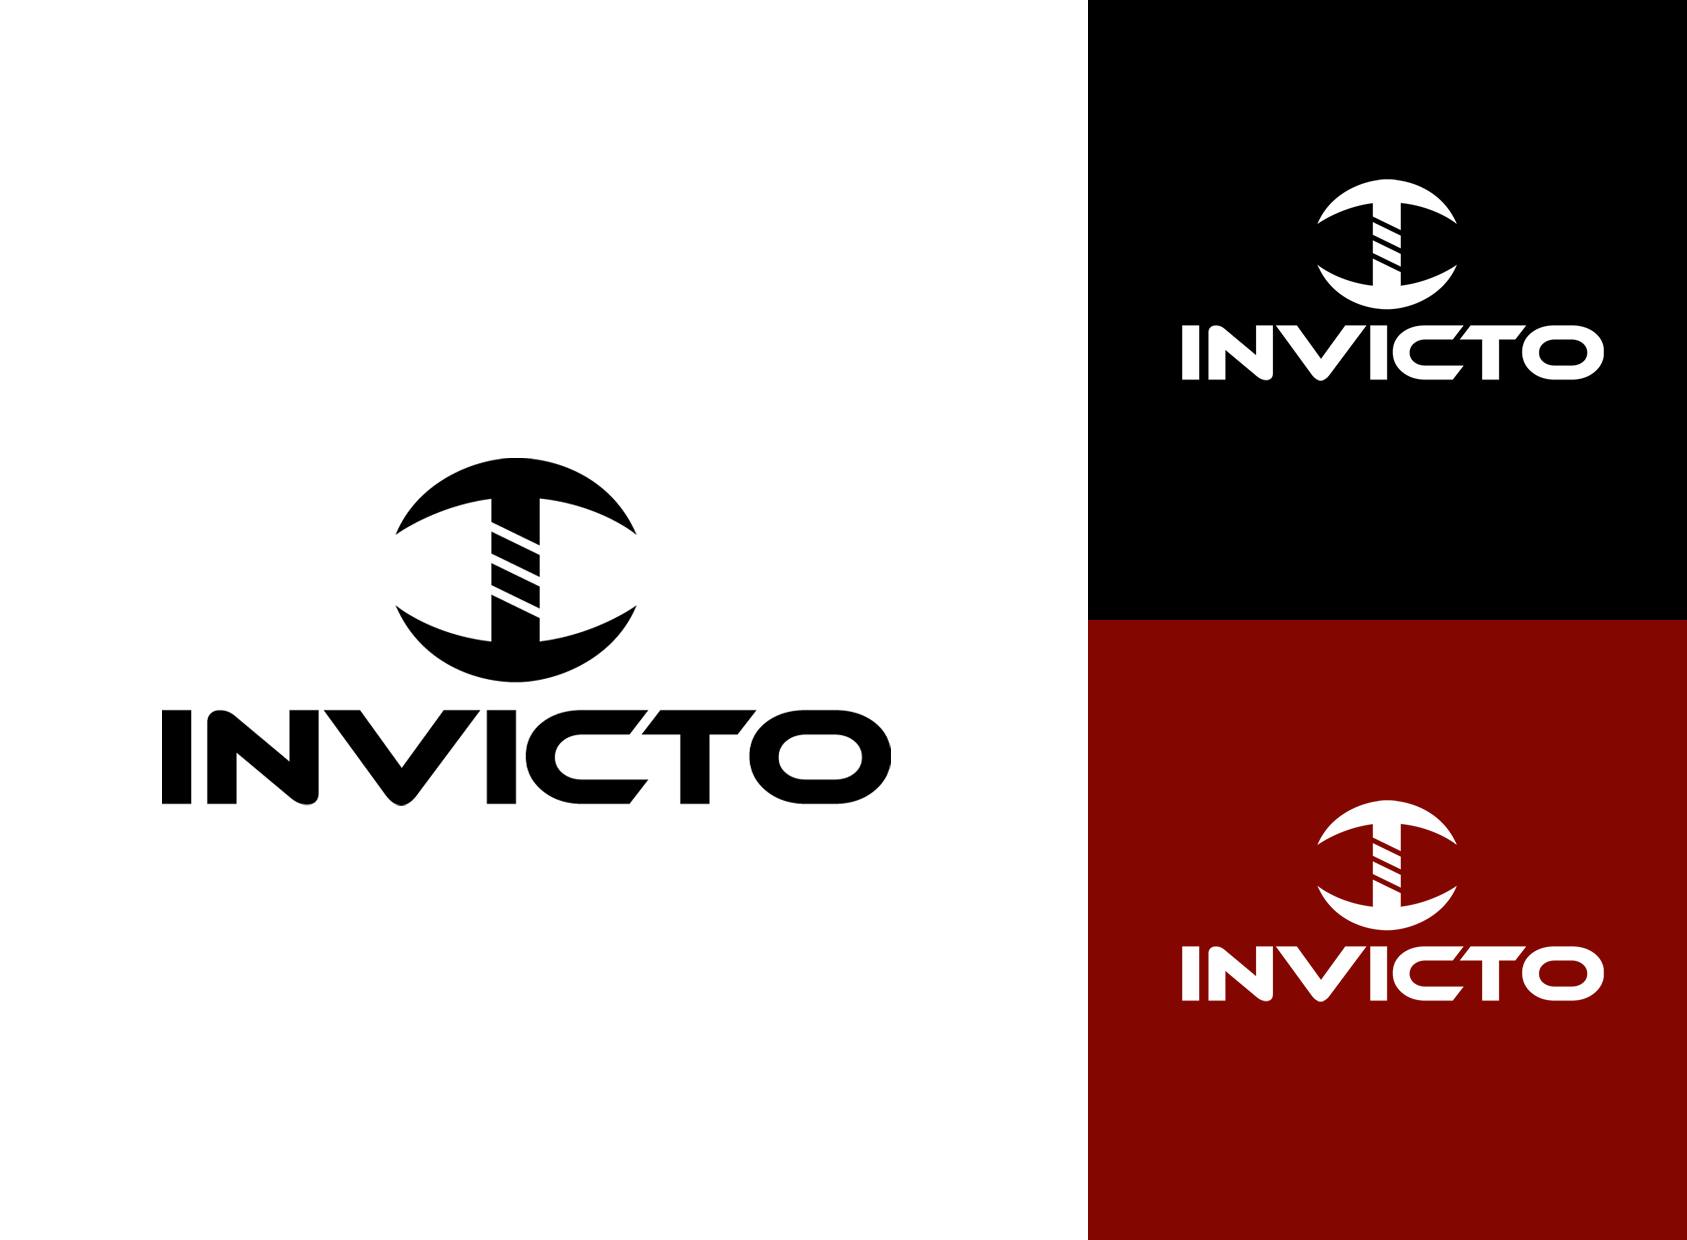 sports brand logos